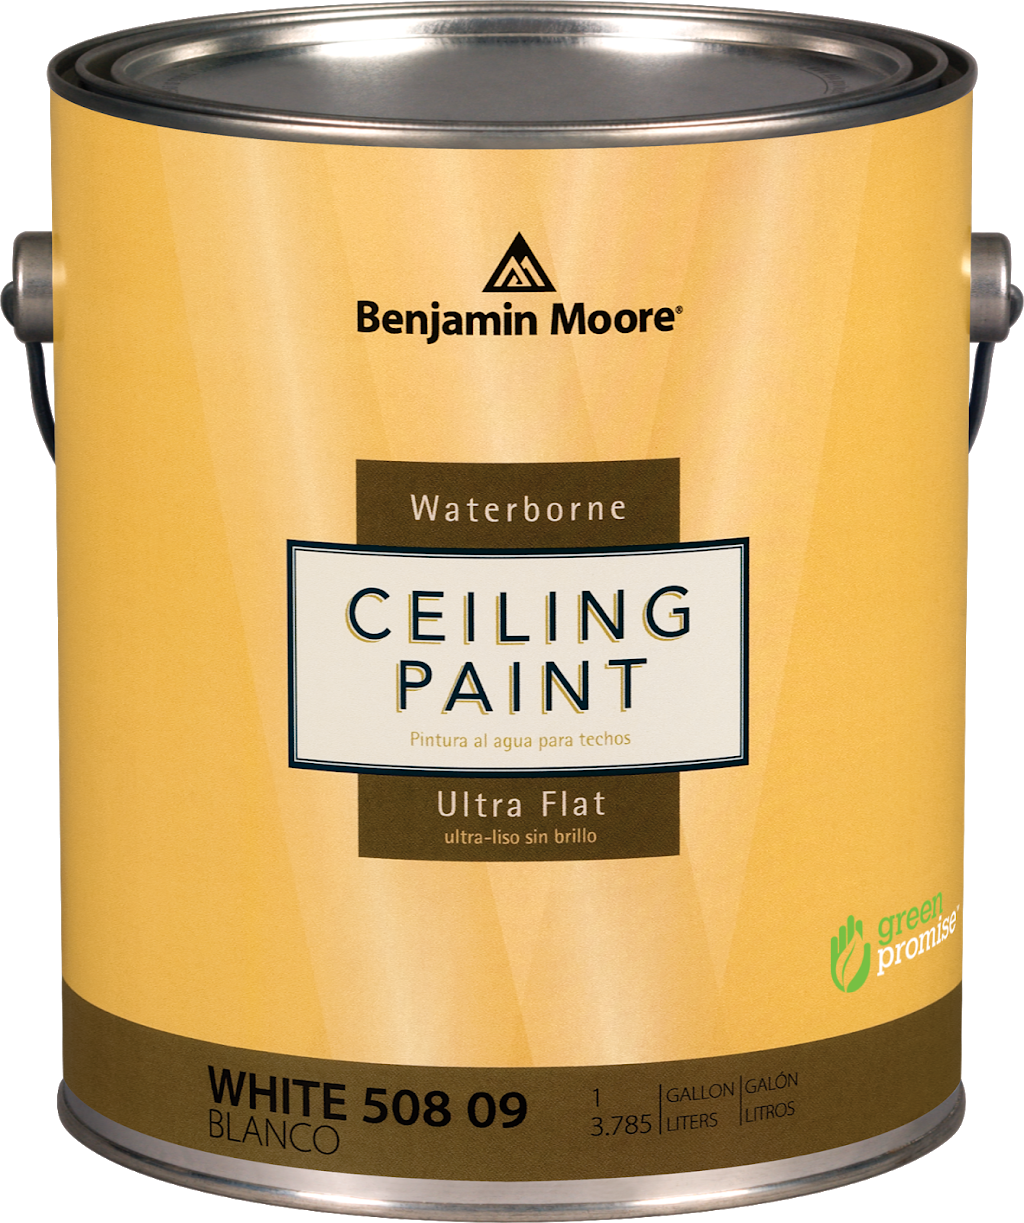 Thybony Professional Paint Center | 413 W Washington Ave, Lake Bluff, IL 60044 | Phone: (847) 735-9020